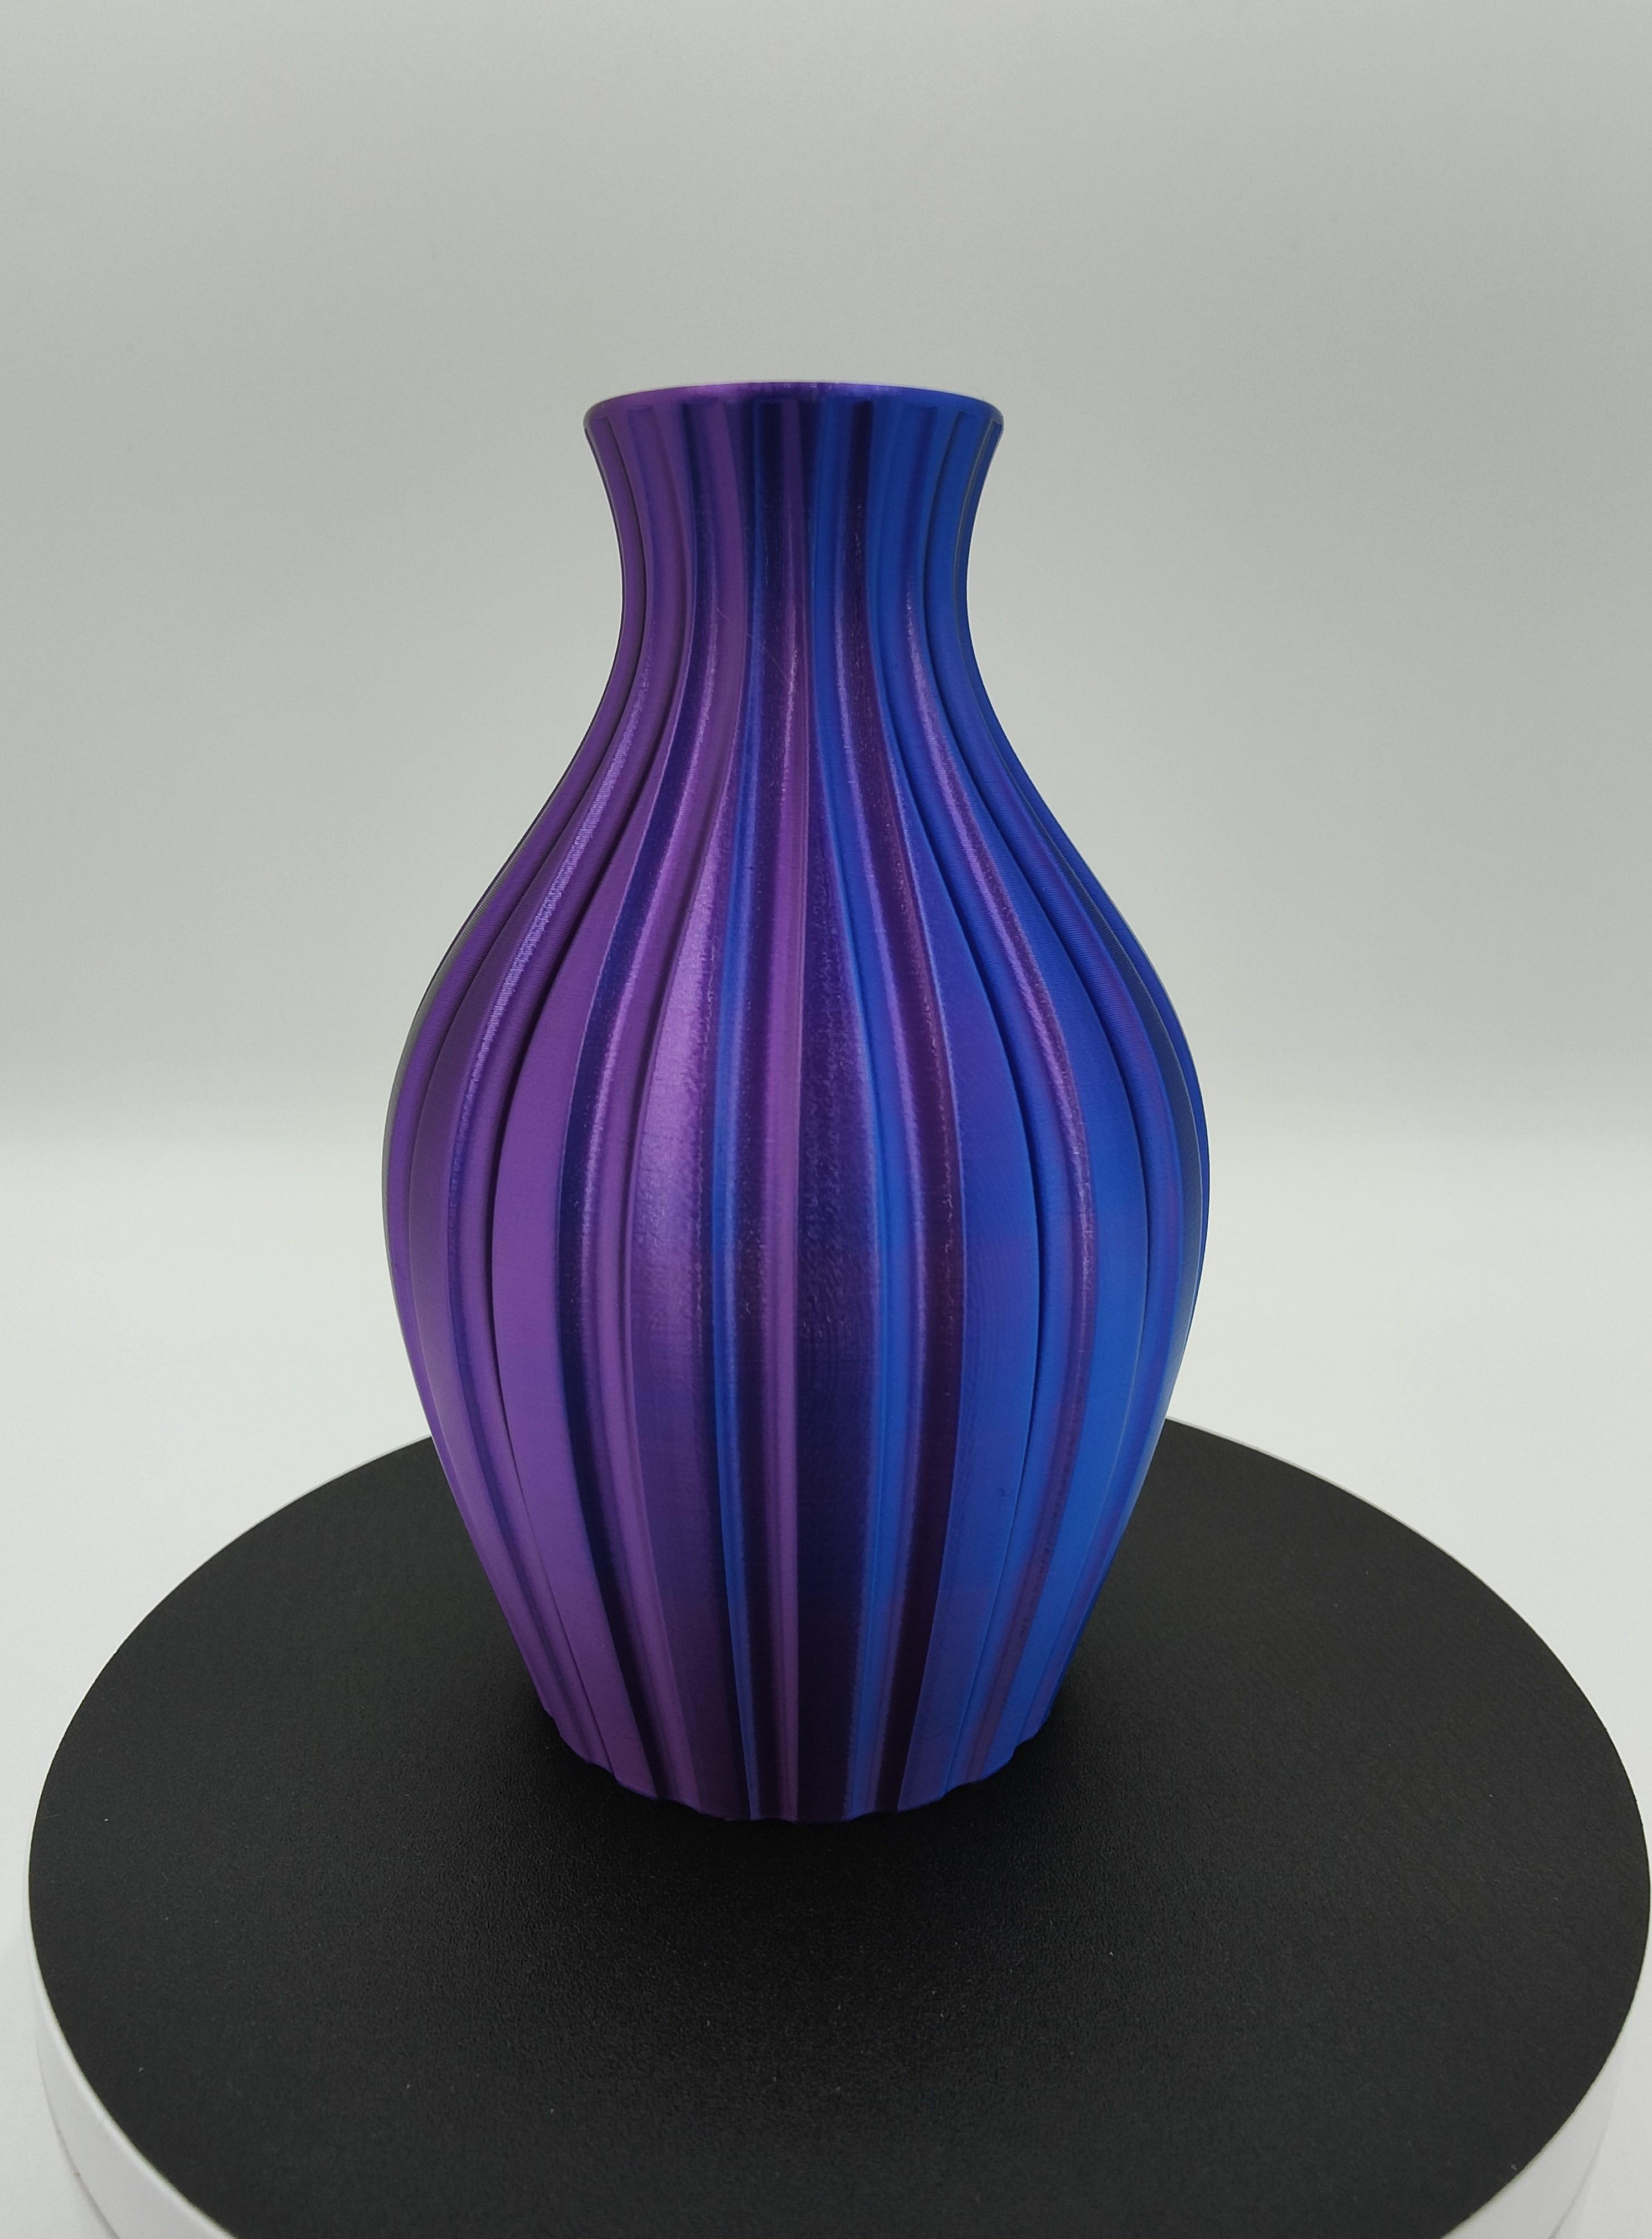 Simple vase 3d model